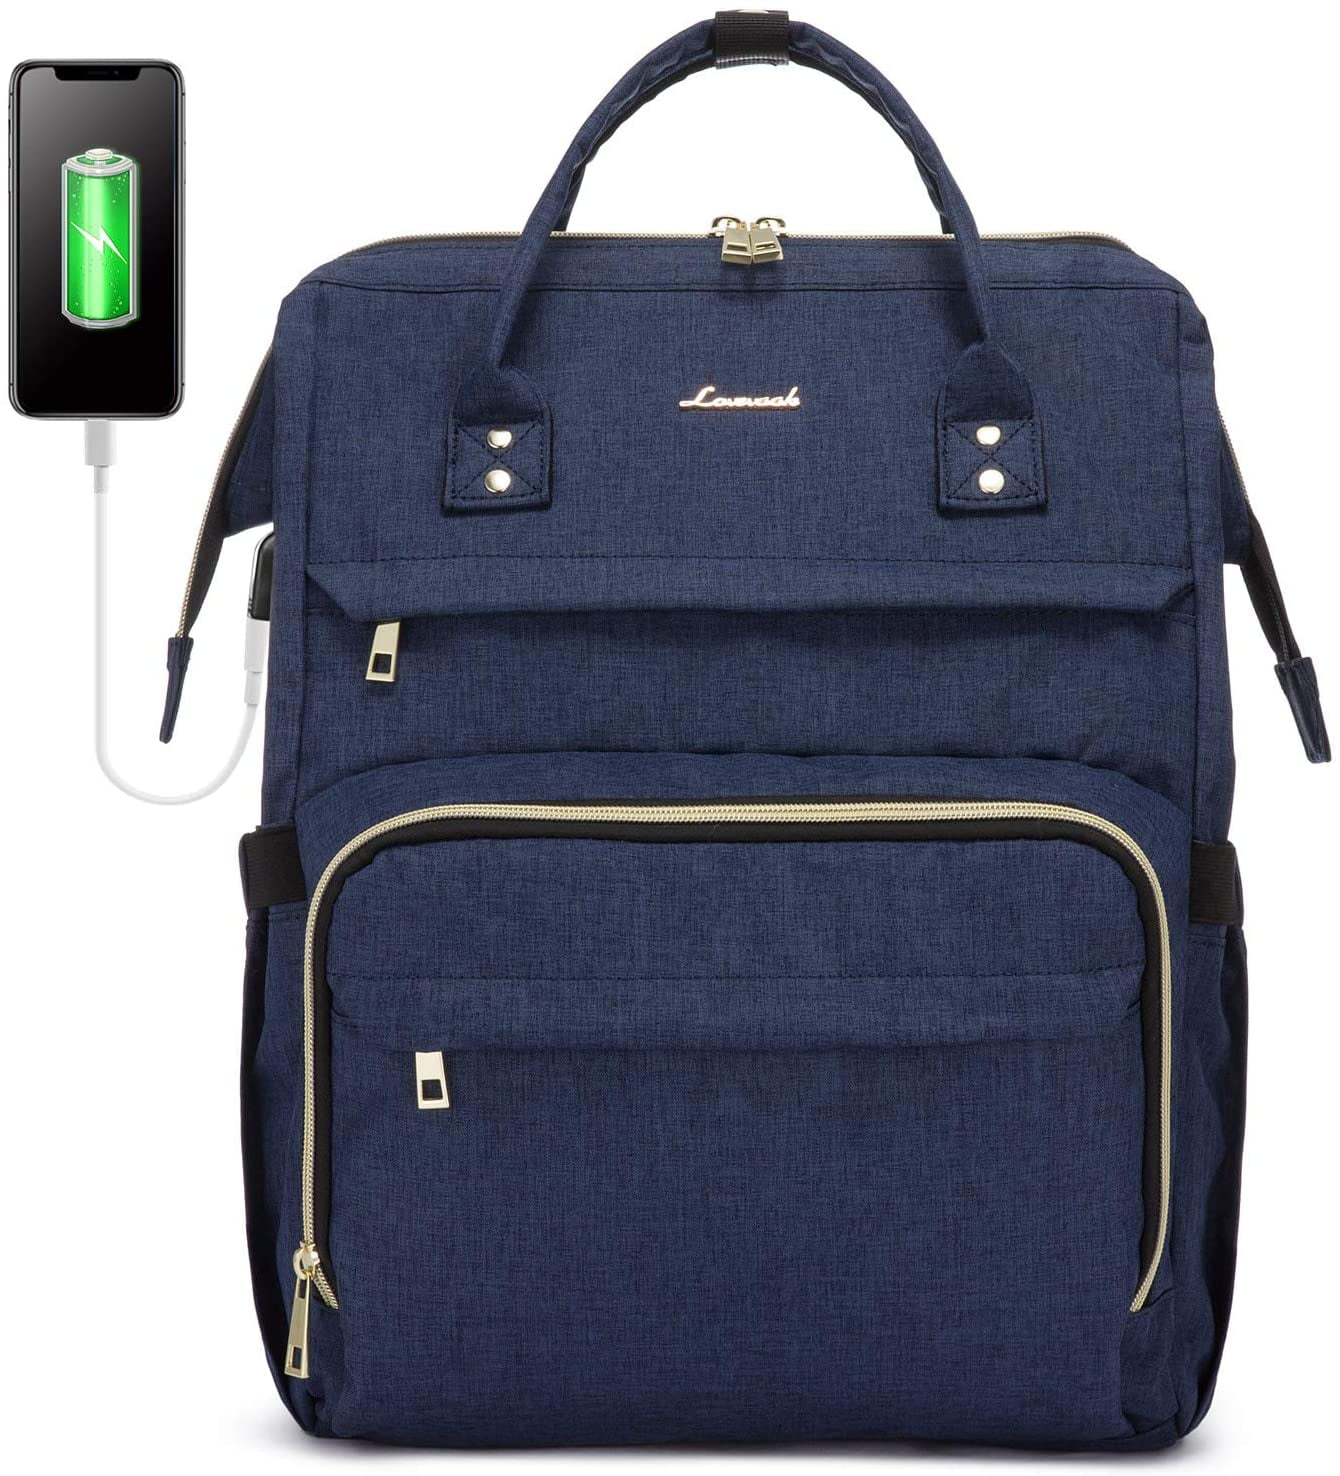 Lovevook Laptop Backpack for Women 17 inch, Waterproof Travel Work Bag ...